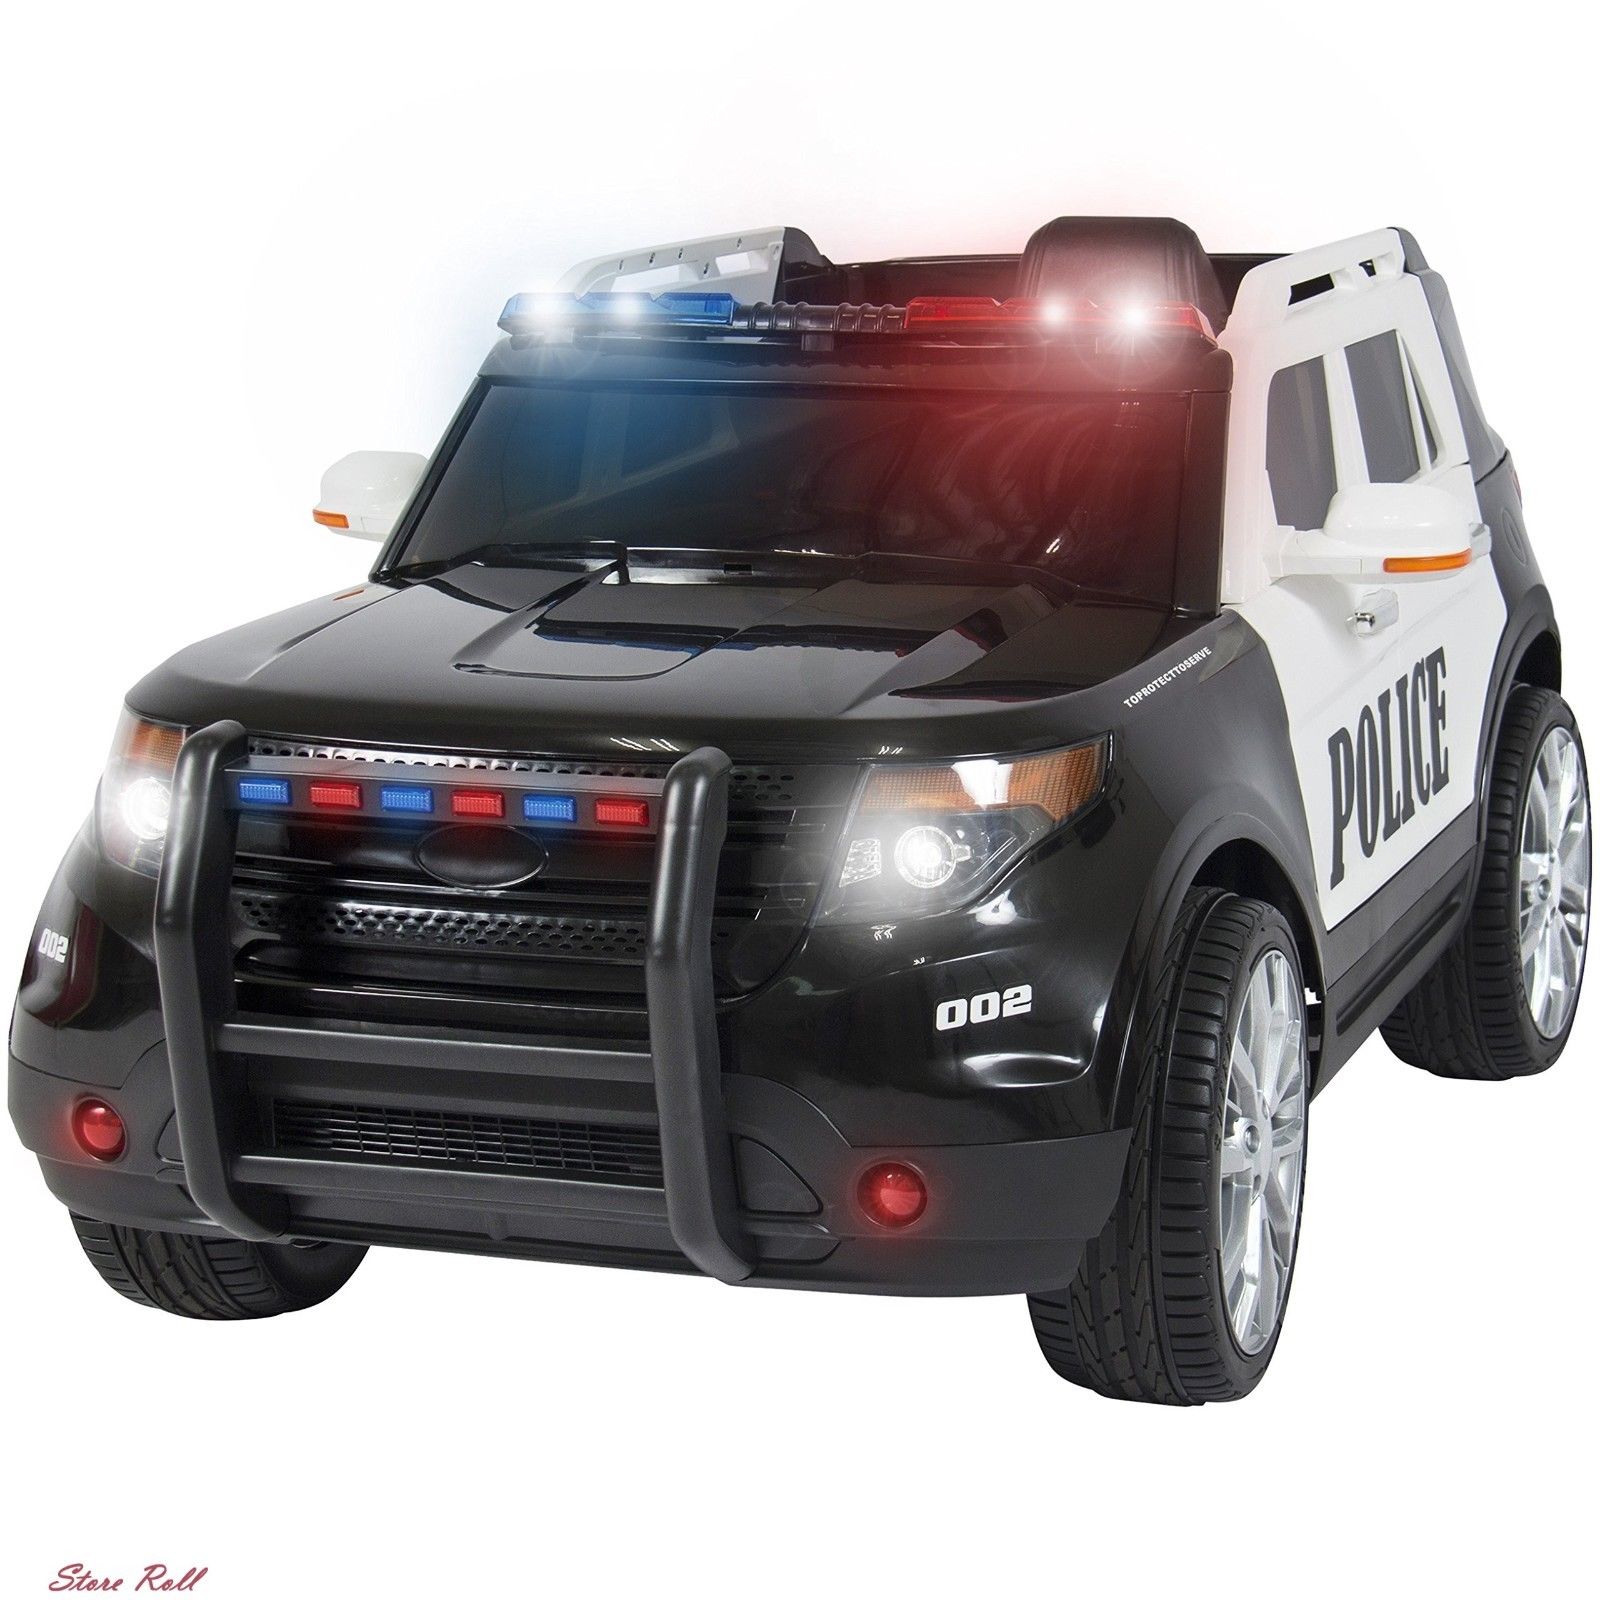 Ride on Police Car | eBay